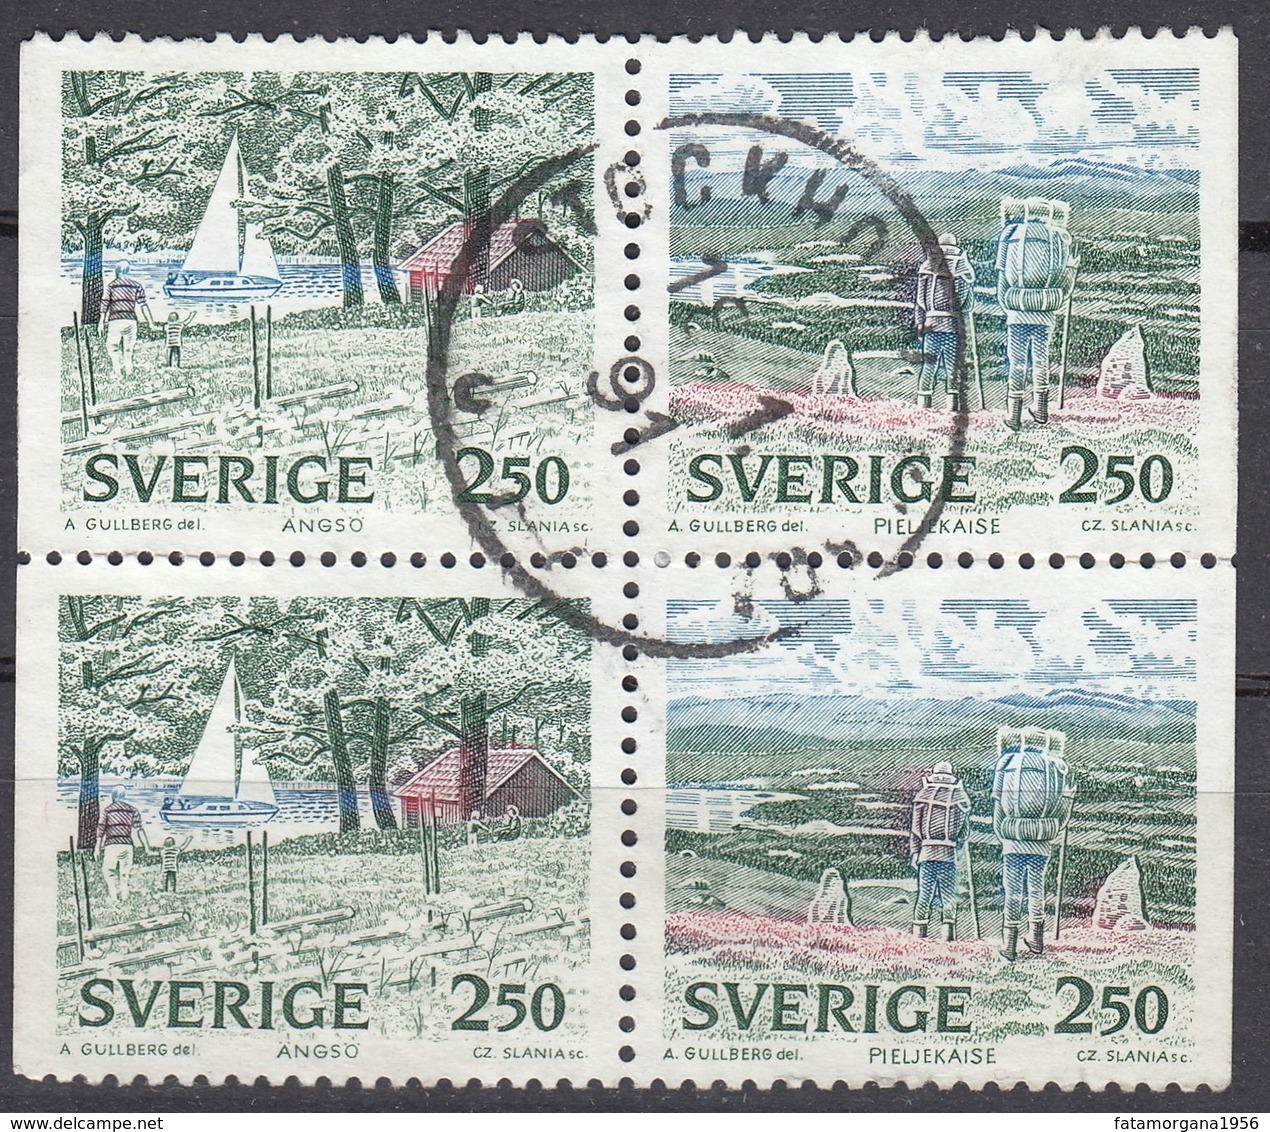 SVERIGE - SVEZIA - SWEDEN - 1990 - Due Valori Yvert 1566a Usati, Uniti Fra Loro, Come Da Immagine. - Usati